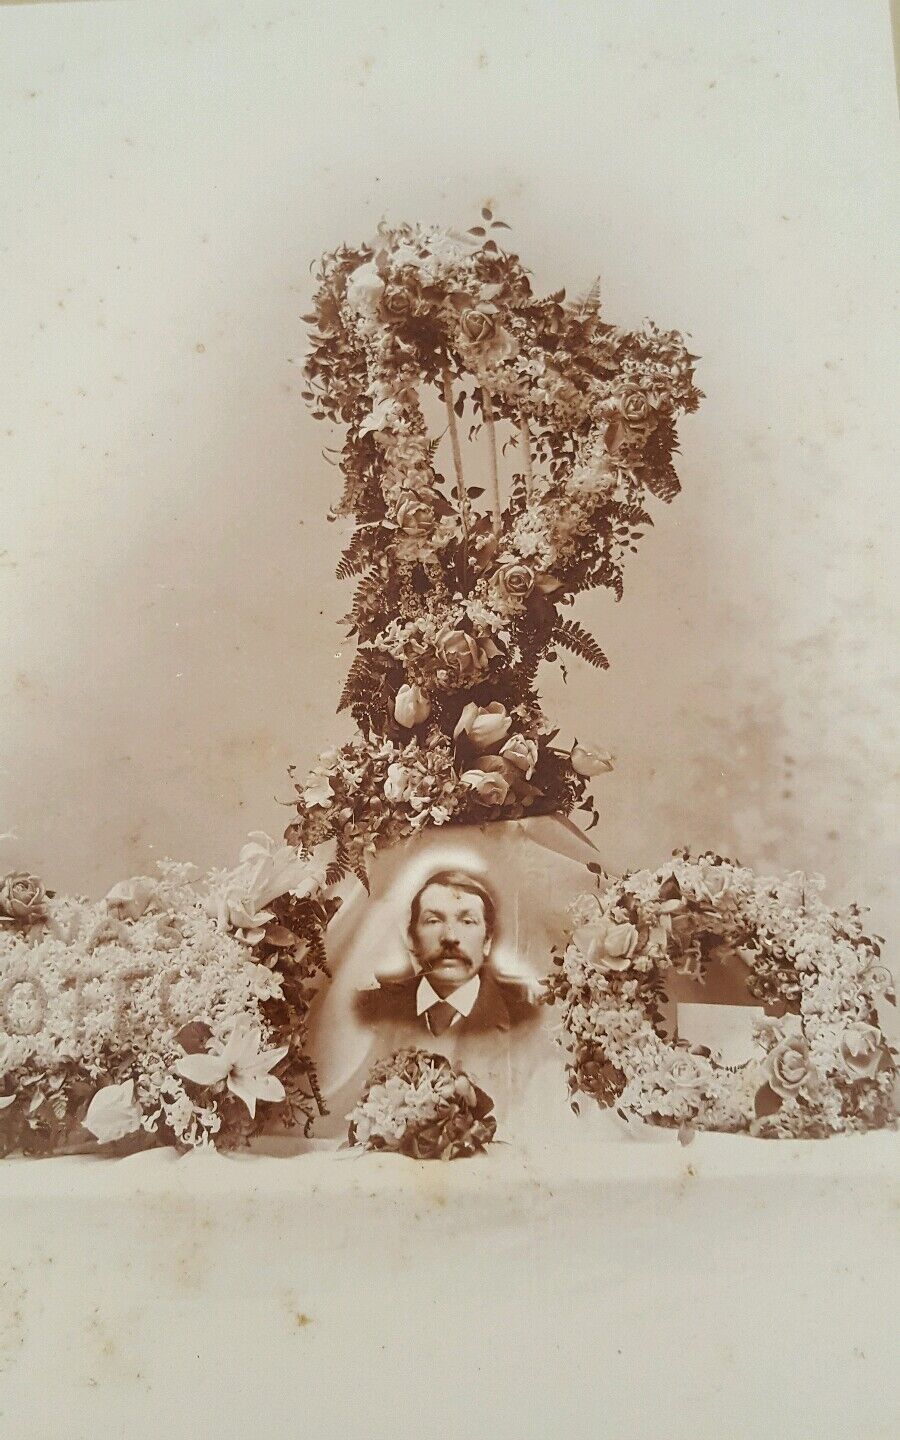 Antique Cabinet Photograph Cedar Rapids, Iowa Funeral Flowers? Unusual History